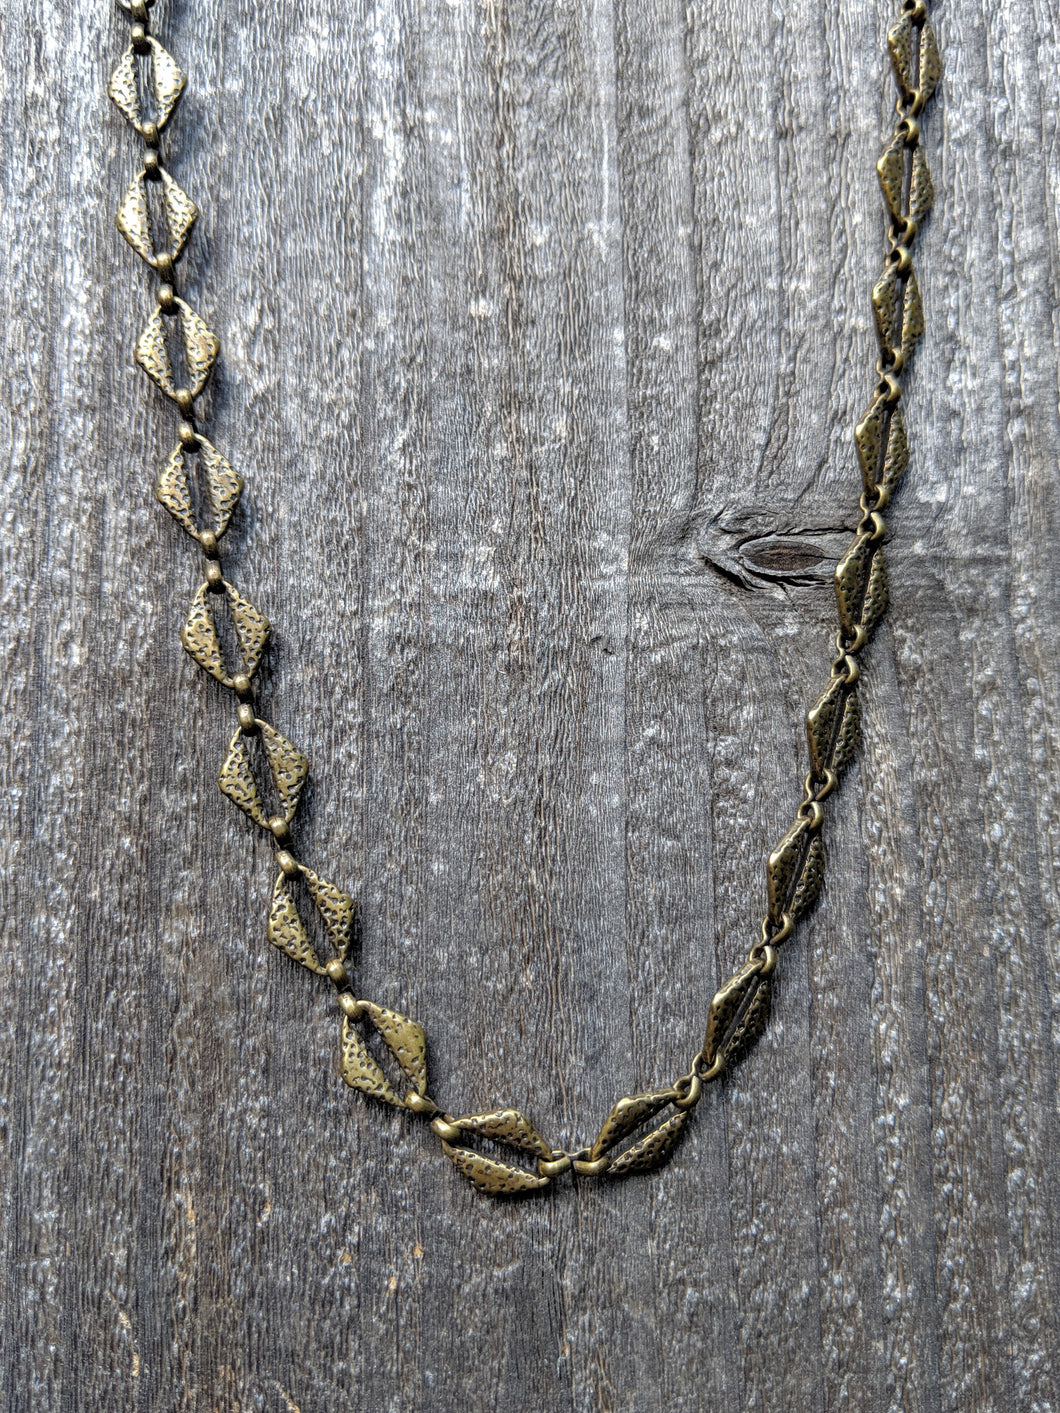 Antique Brass Necklace